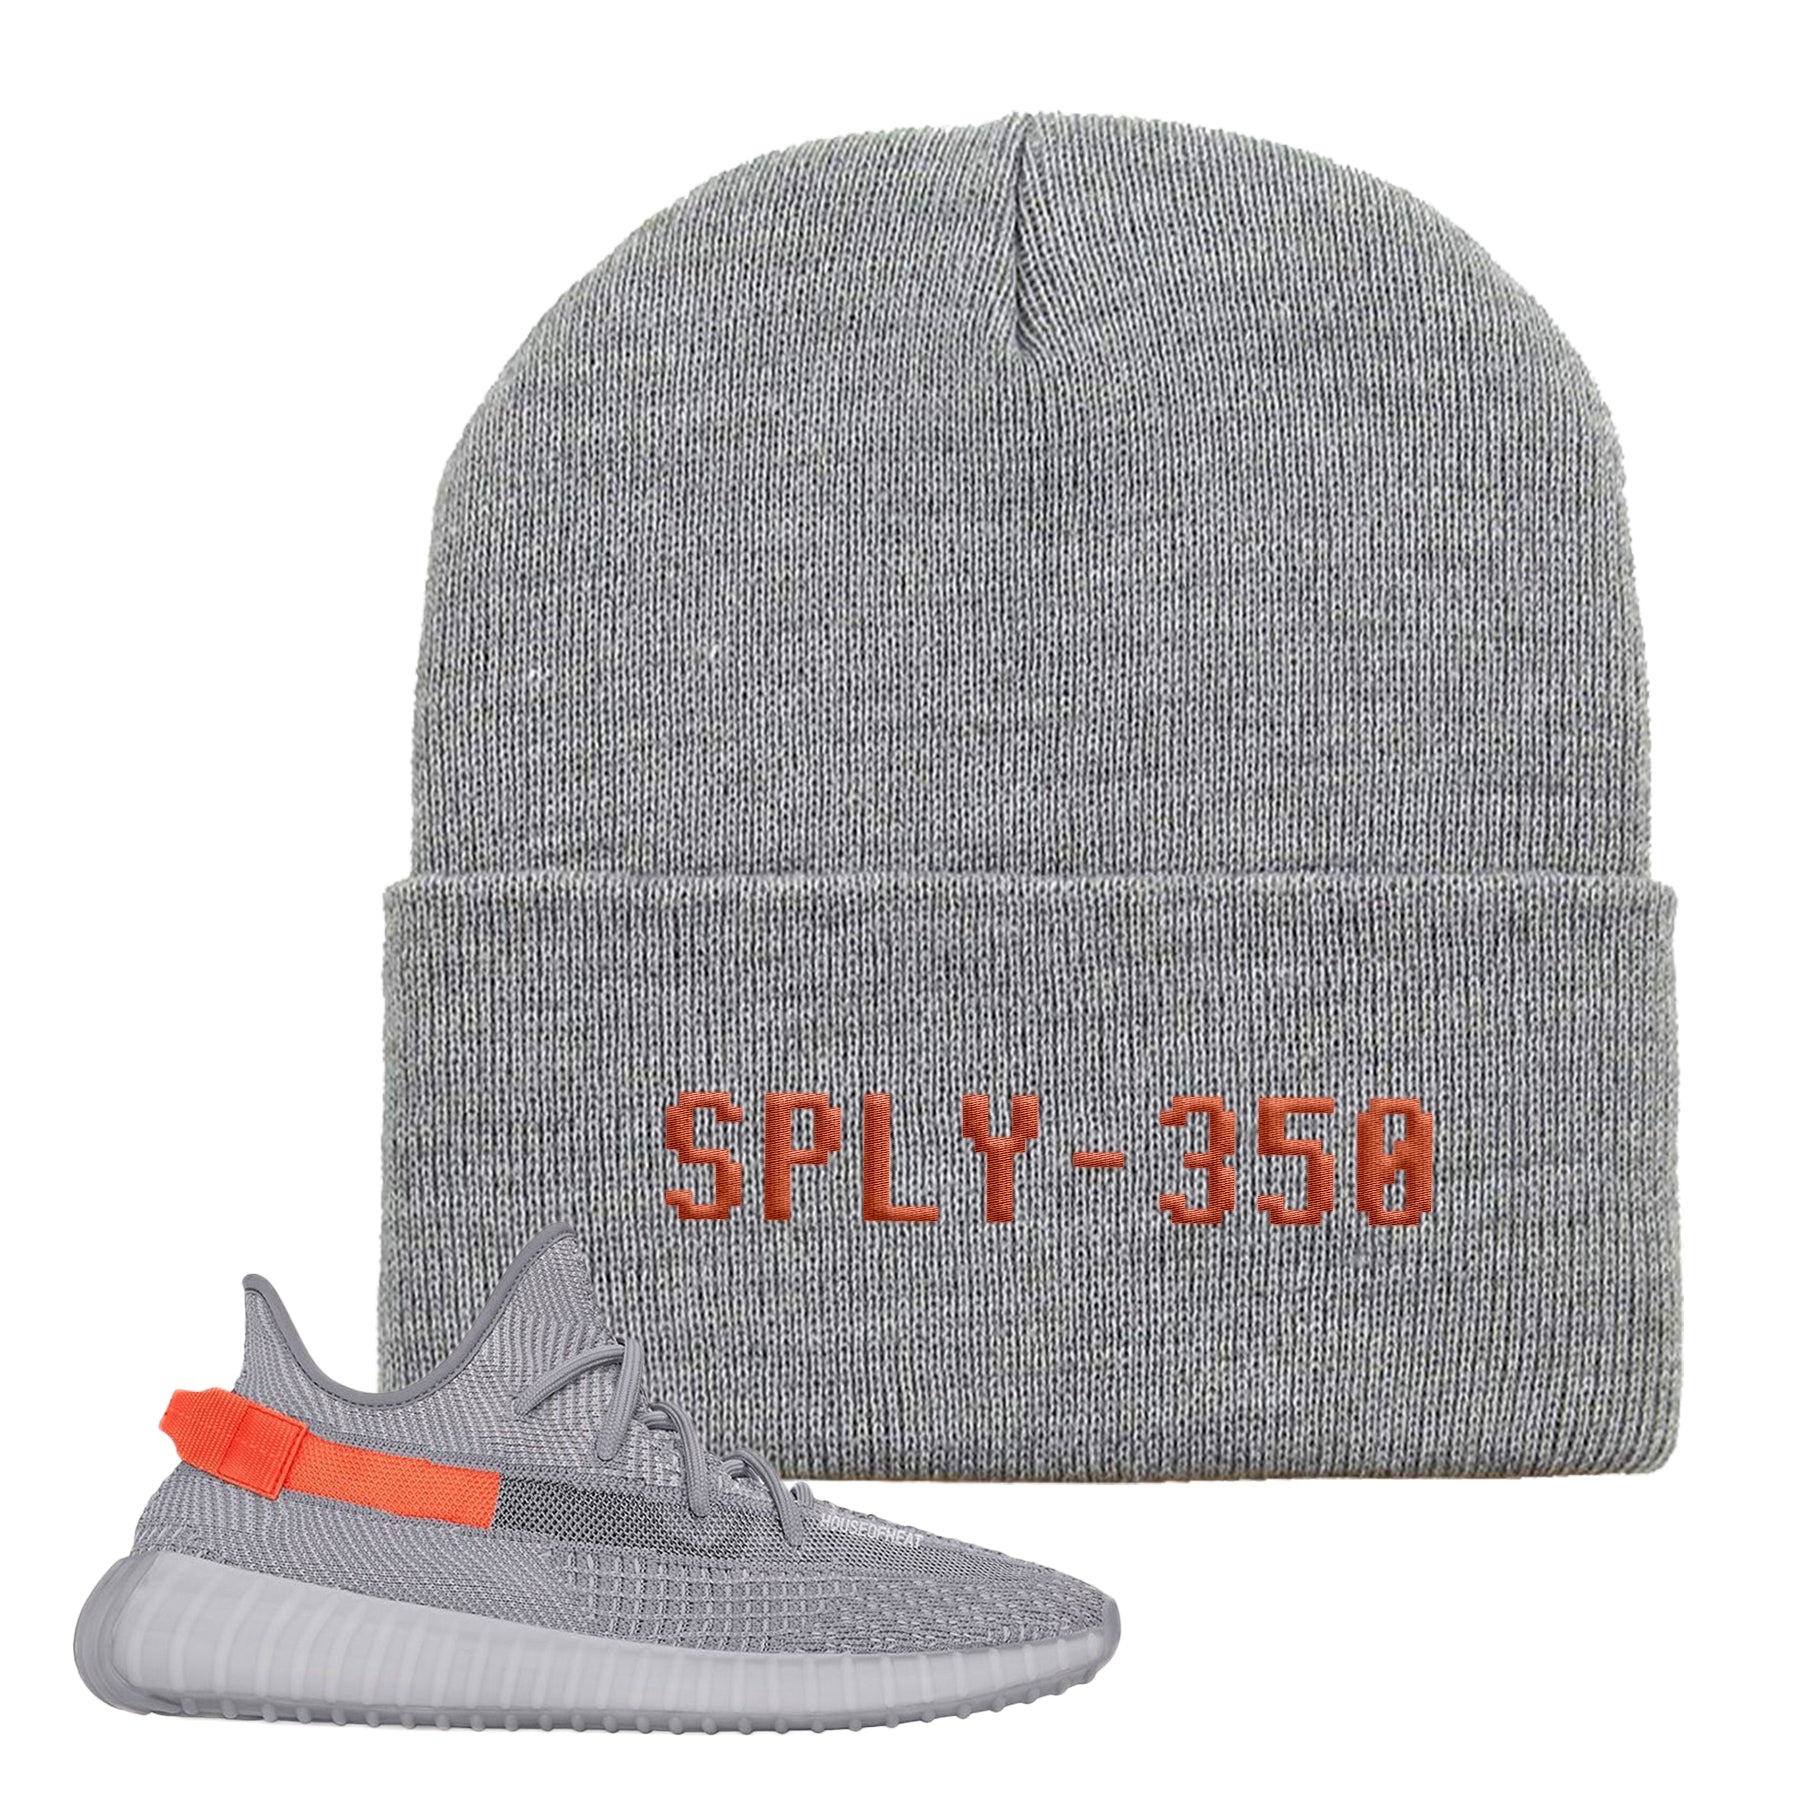 yeezy sply 350 gray